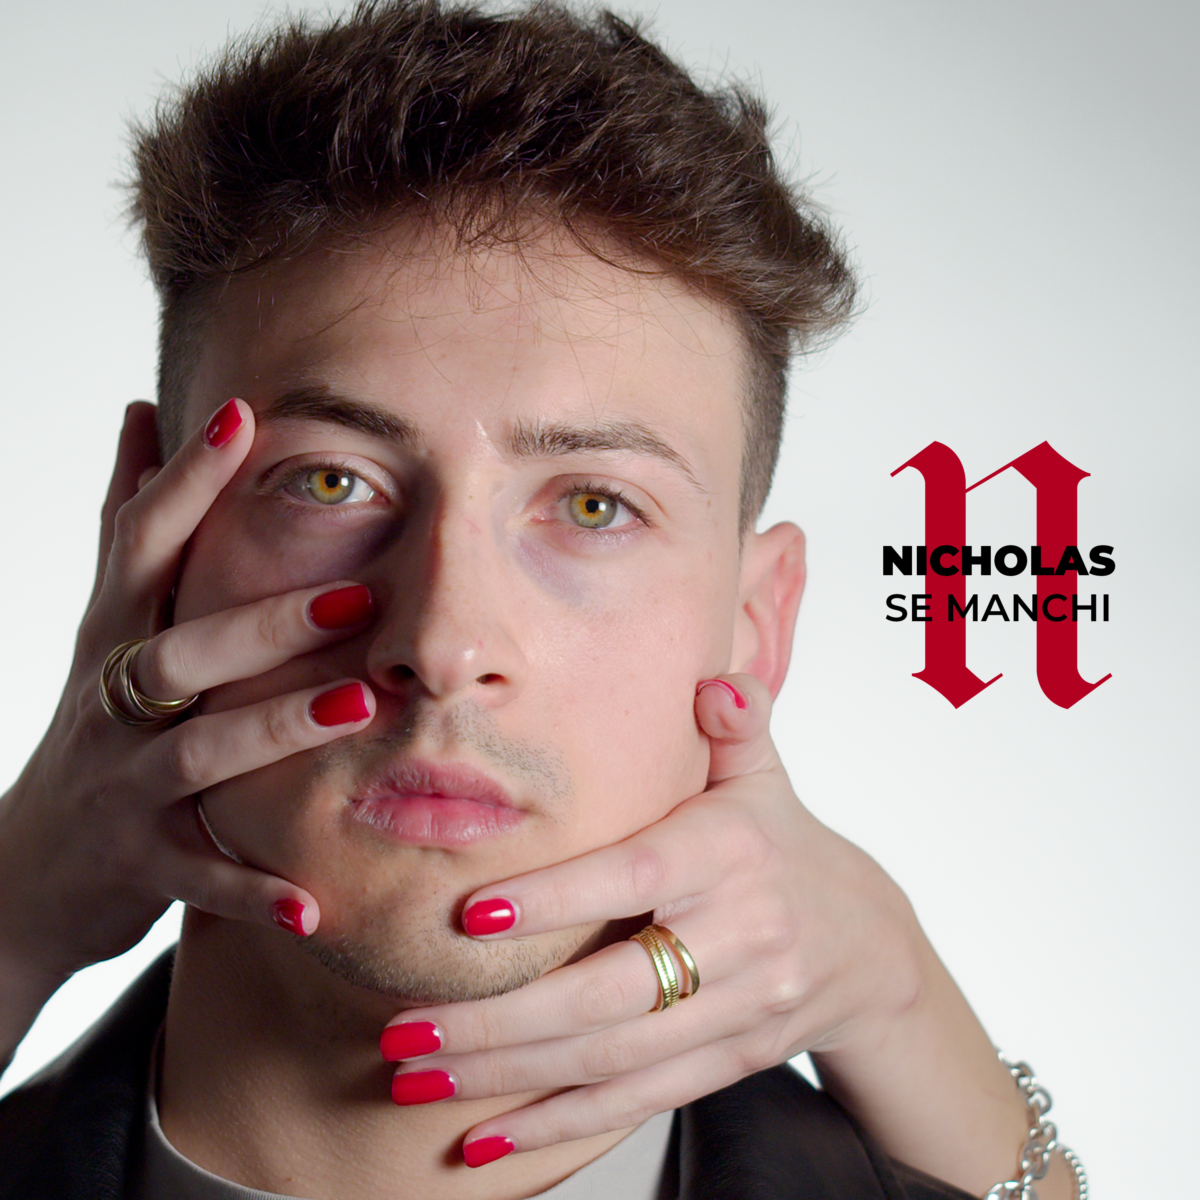 Nicholas "Se manchi" il terzo singolo - copertina